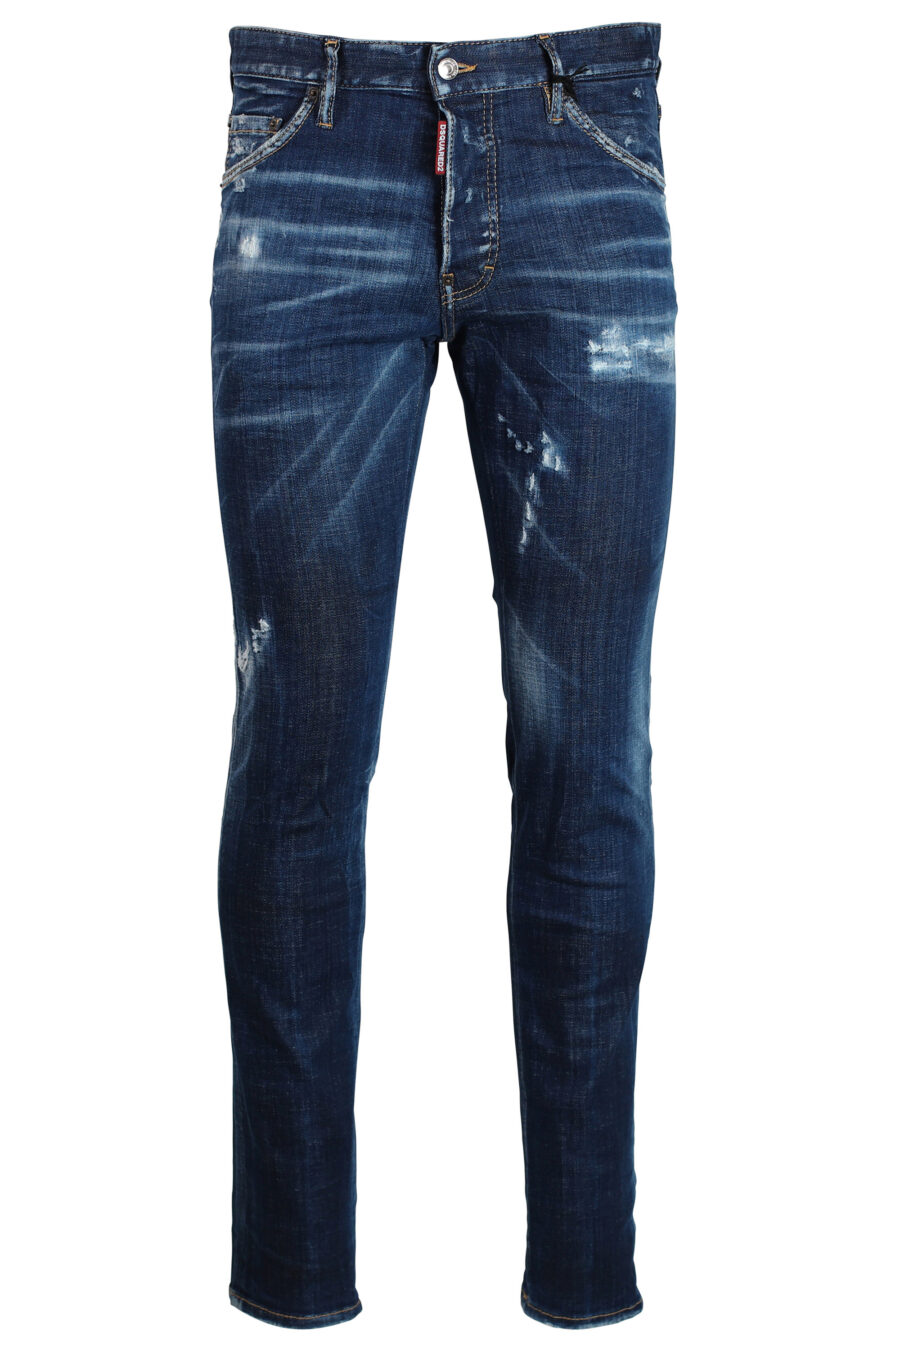 Icon cool guy" jeans dark blue semi-worn - 8052134643259